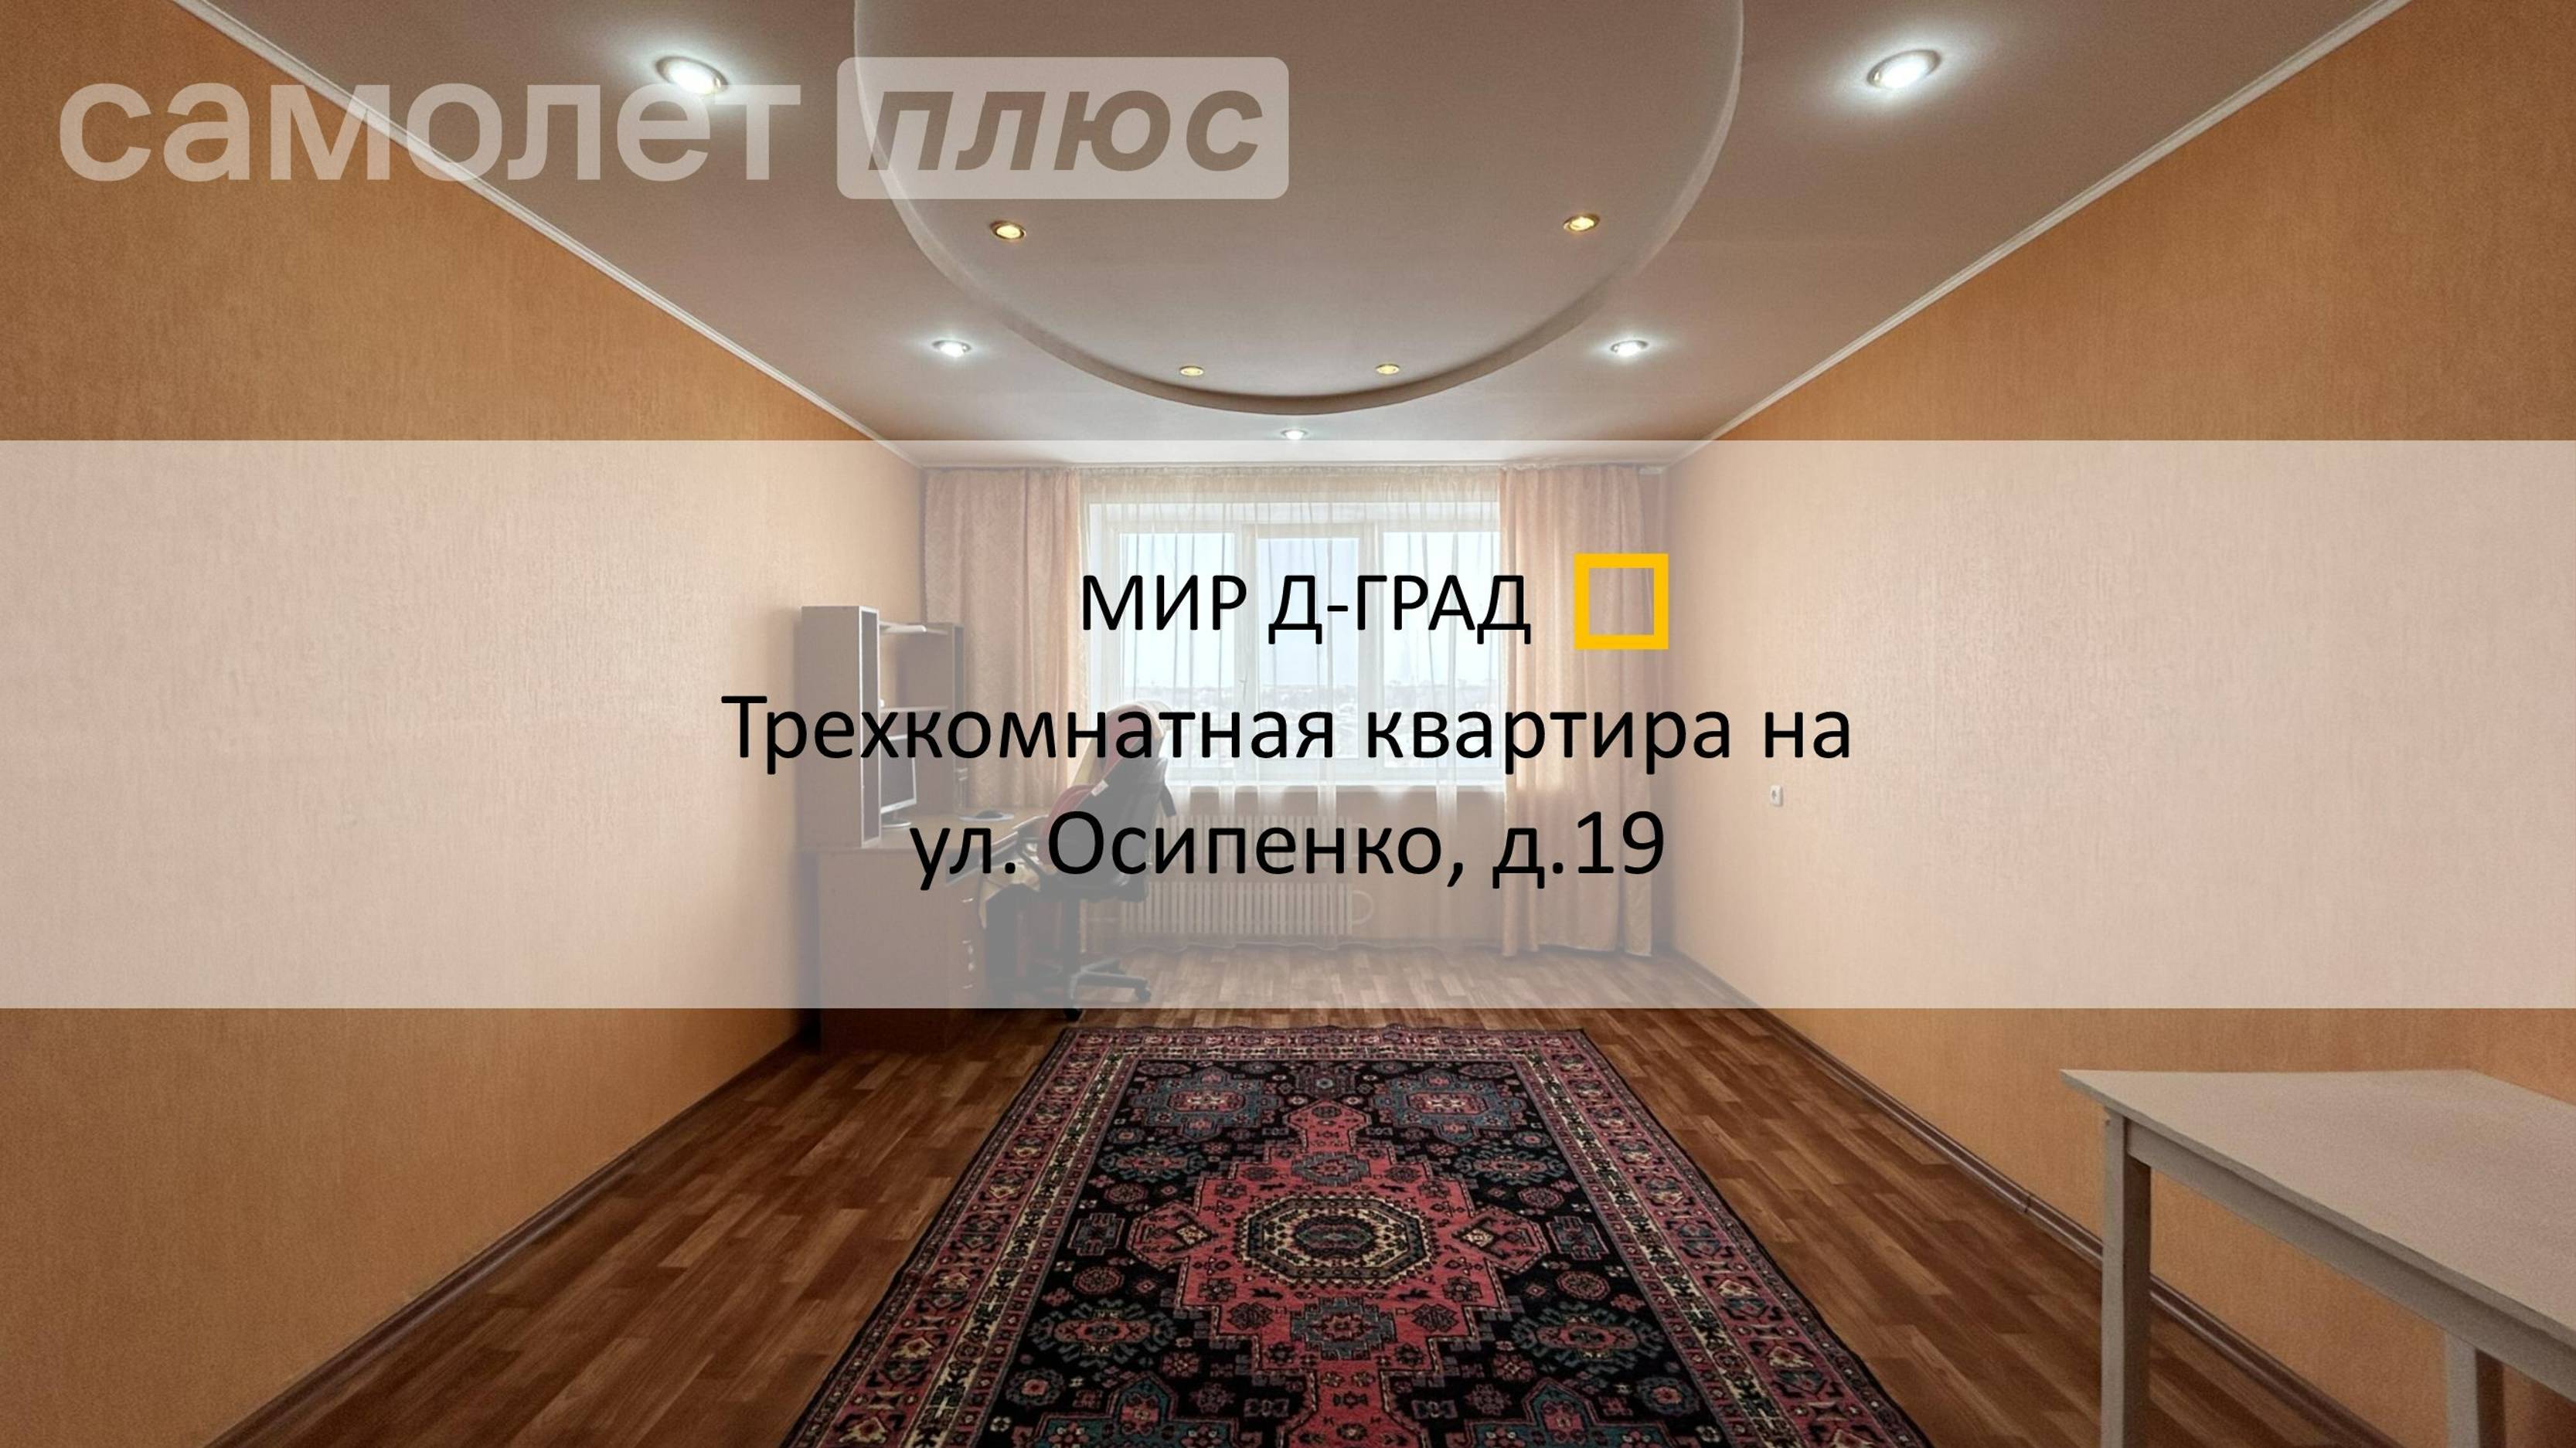 3 кмн. кв. на ул. Осипенко, д.19, 67,2 м², 9 этаж, г. Димитровград